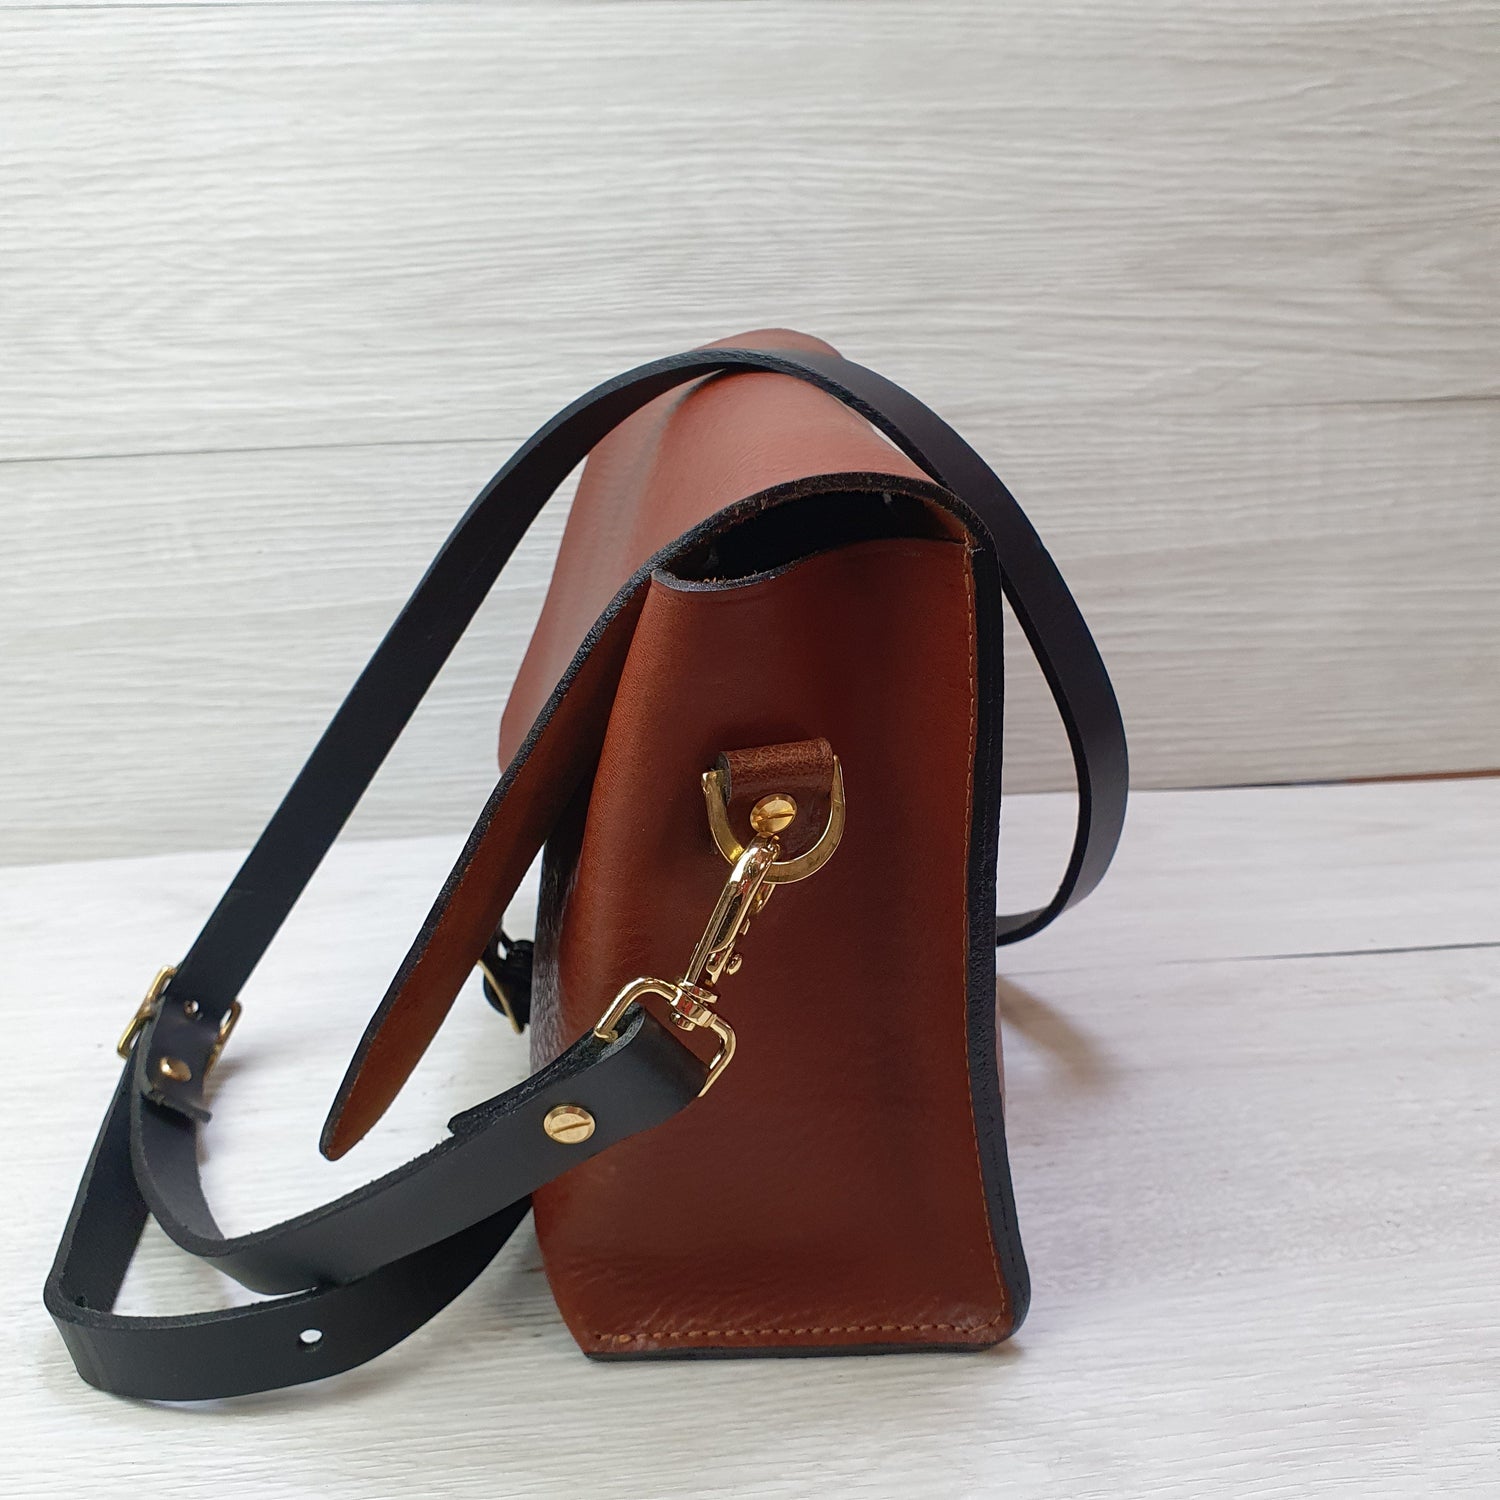 Hands of Tym Handbags 'Hickory Satchel' Bespoke Handmade Luxury Leather Cross Body Bag Tan Brown